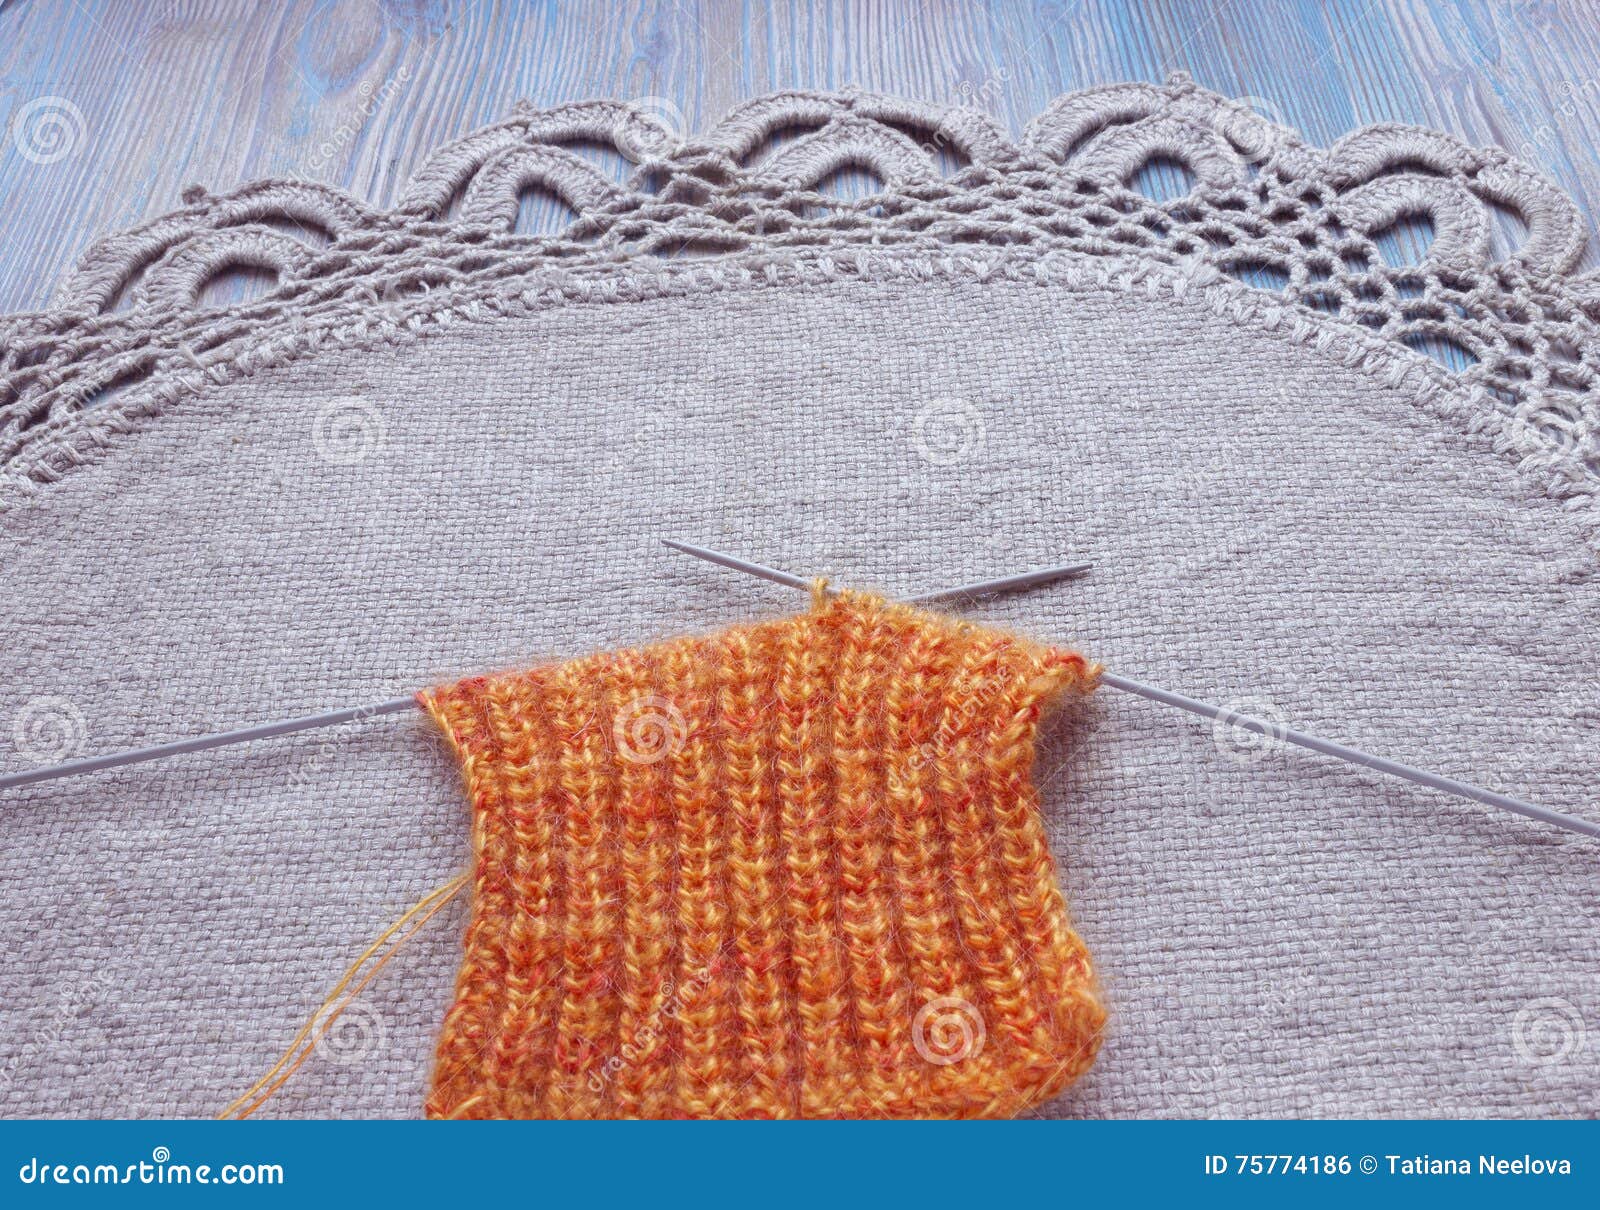 Knitting Orange Mohair Wool Stock Photo - Image of cloth, leisure: 75774186